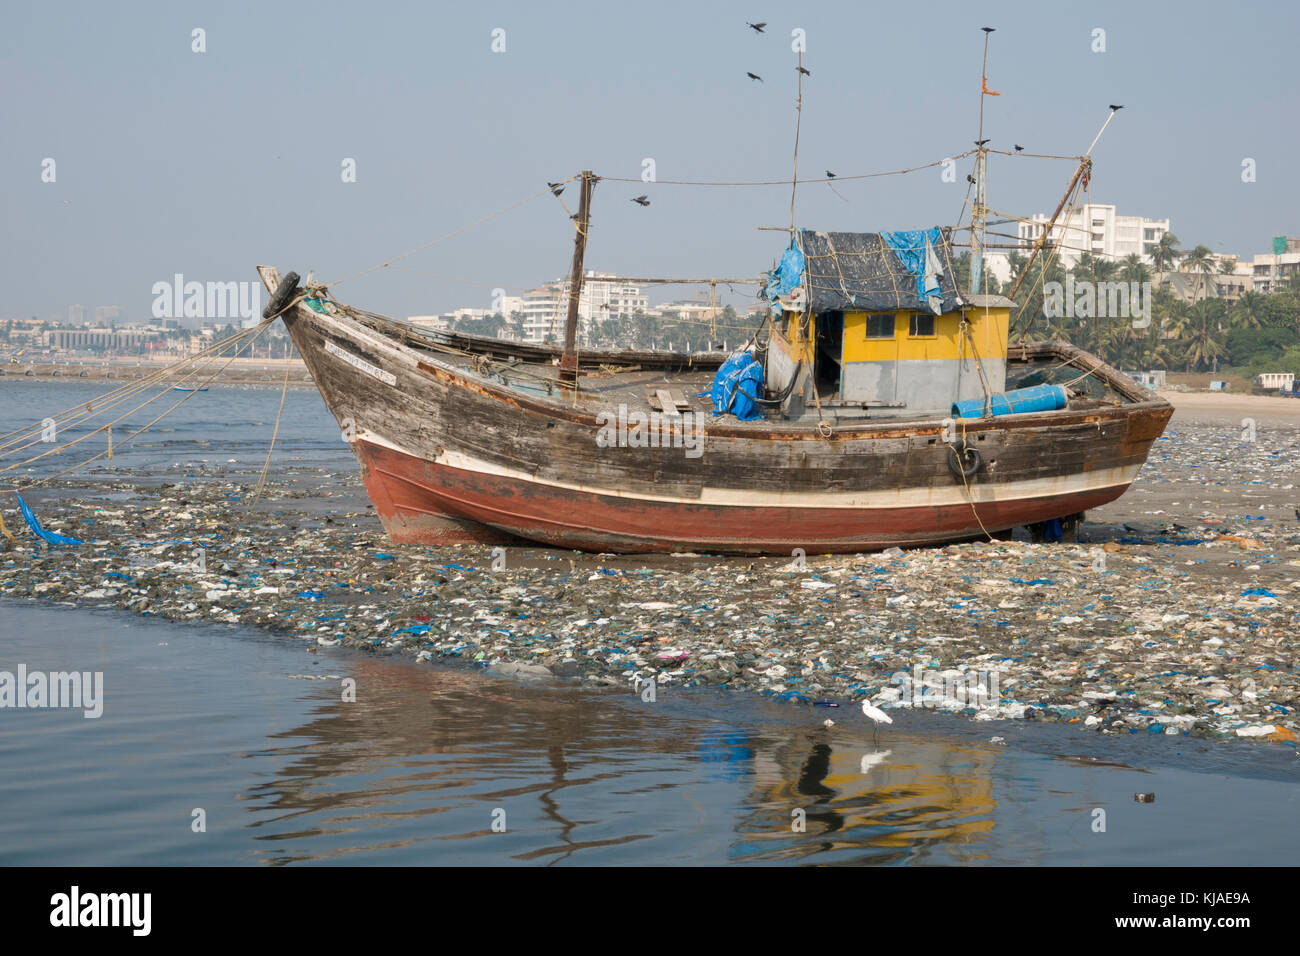 Wooden fishing boat on beach amongst plastic trash in Mumbai, India Stock Photo